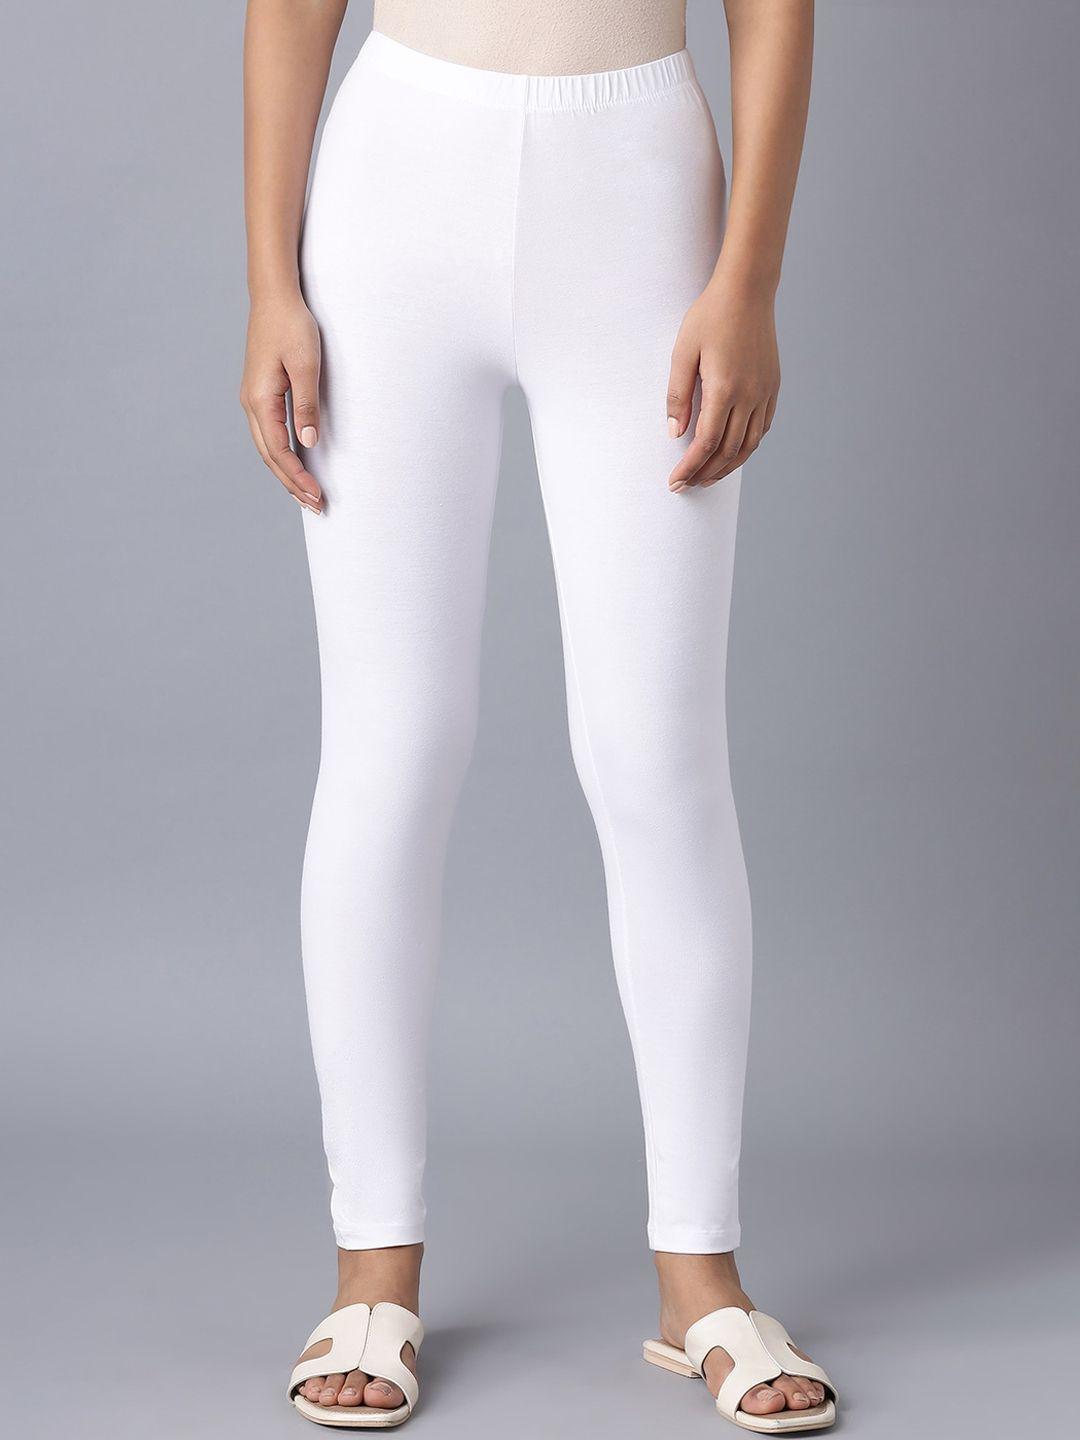 elleven women white cotton lycra cropped tights